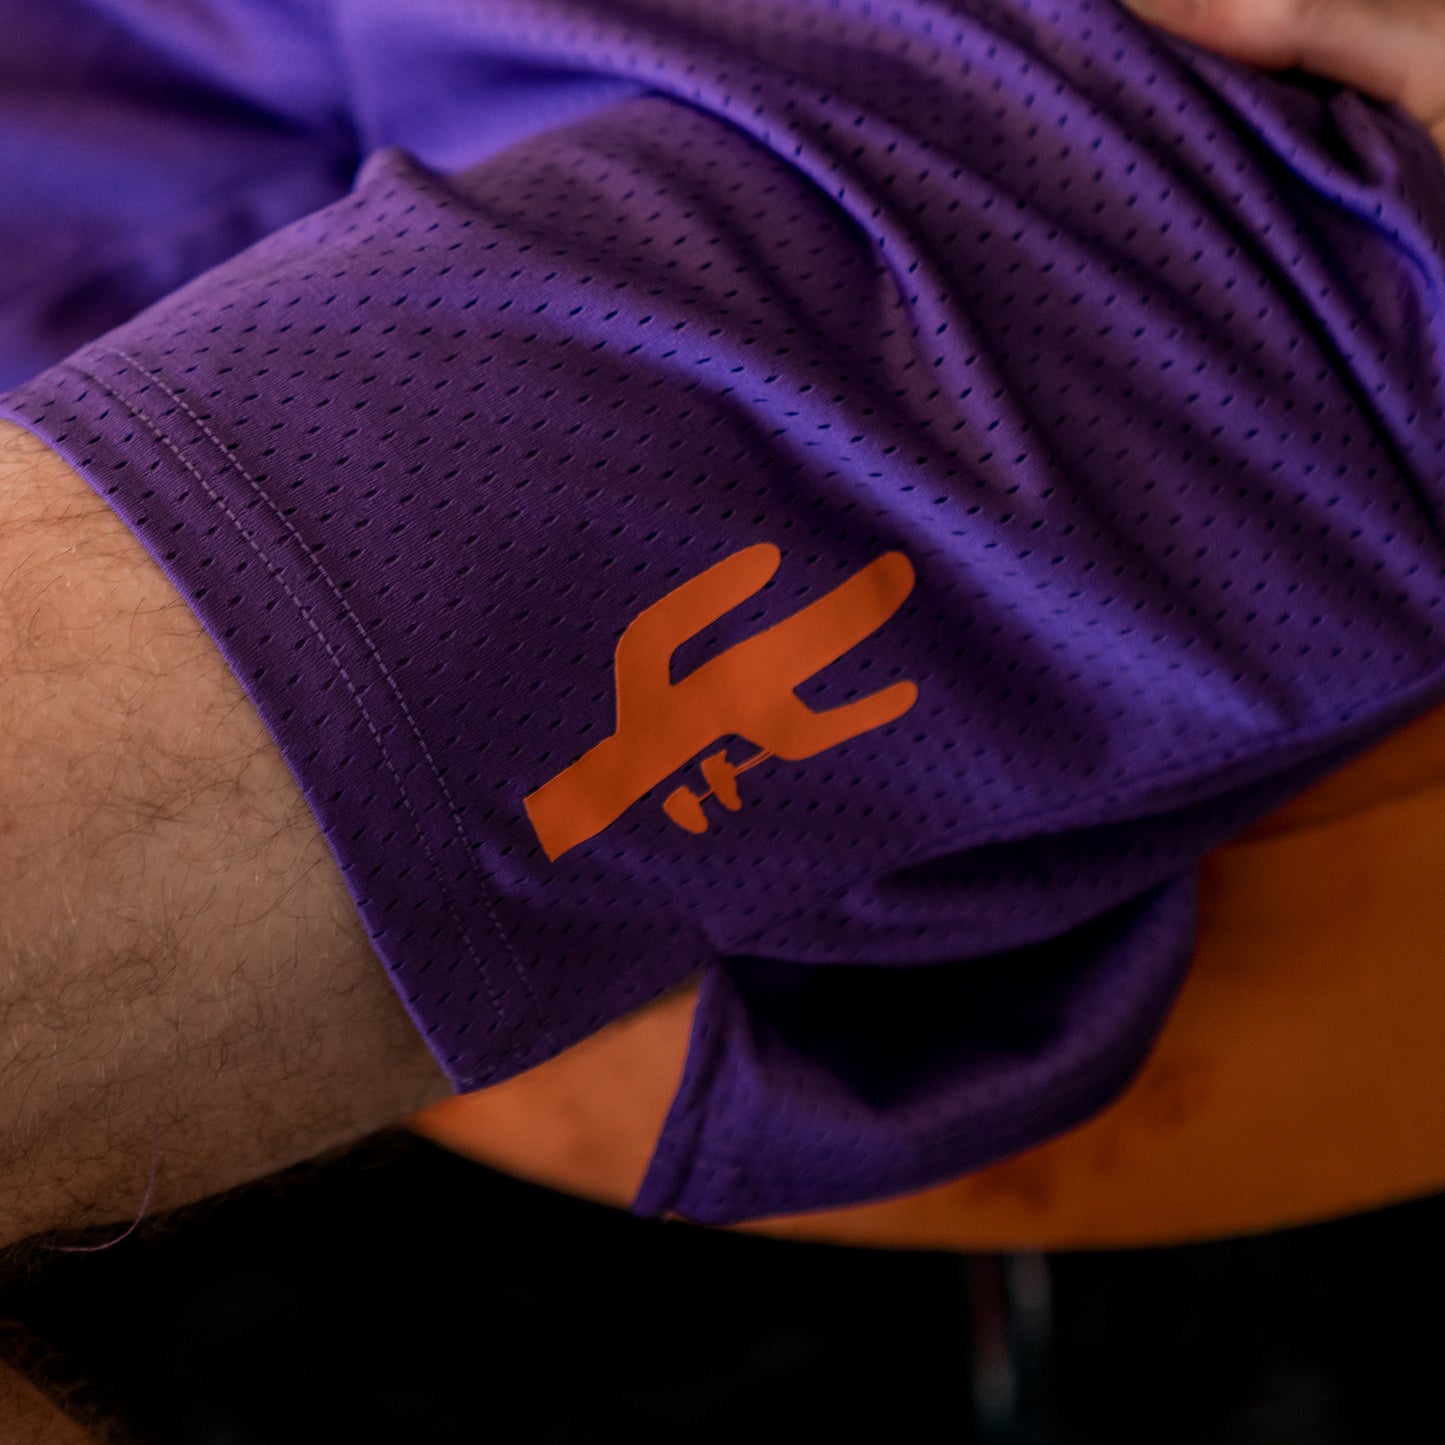 Manor  "Mesh Gym Shorts" M - Purple / Orange